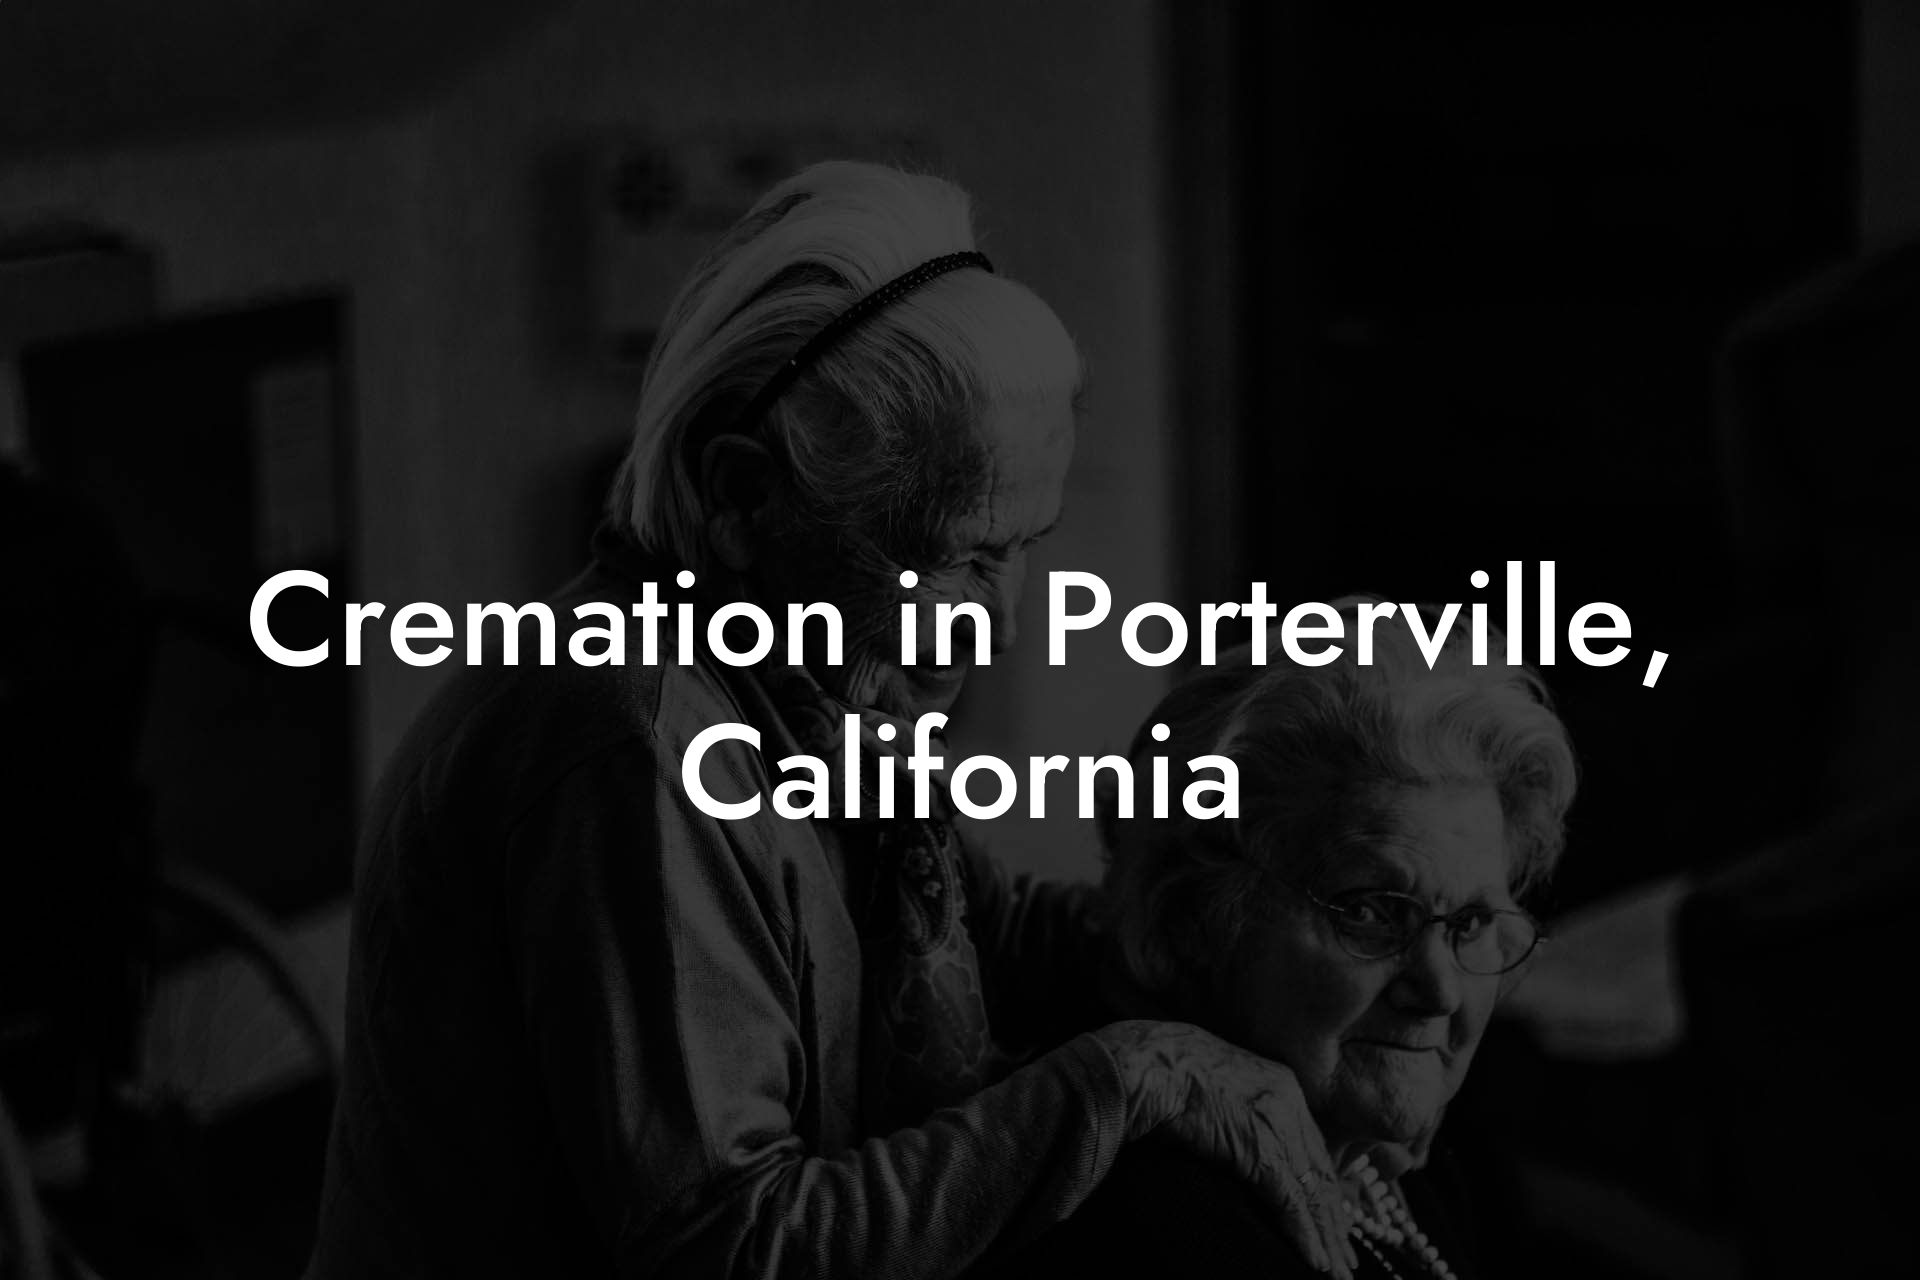 Cremation in Porterville, California